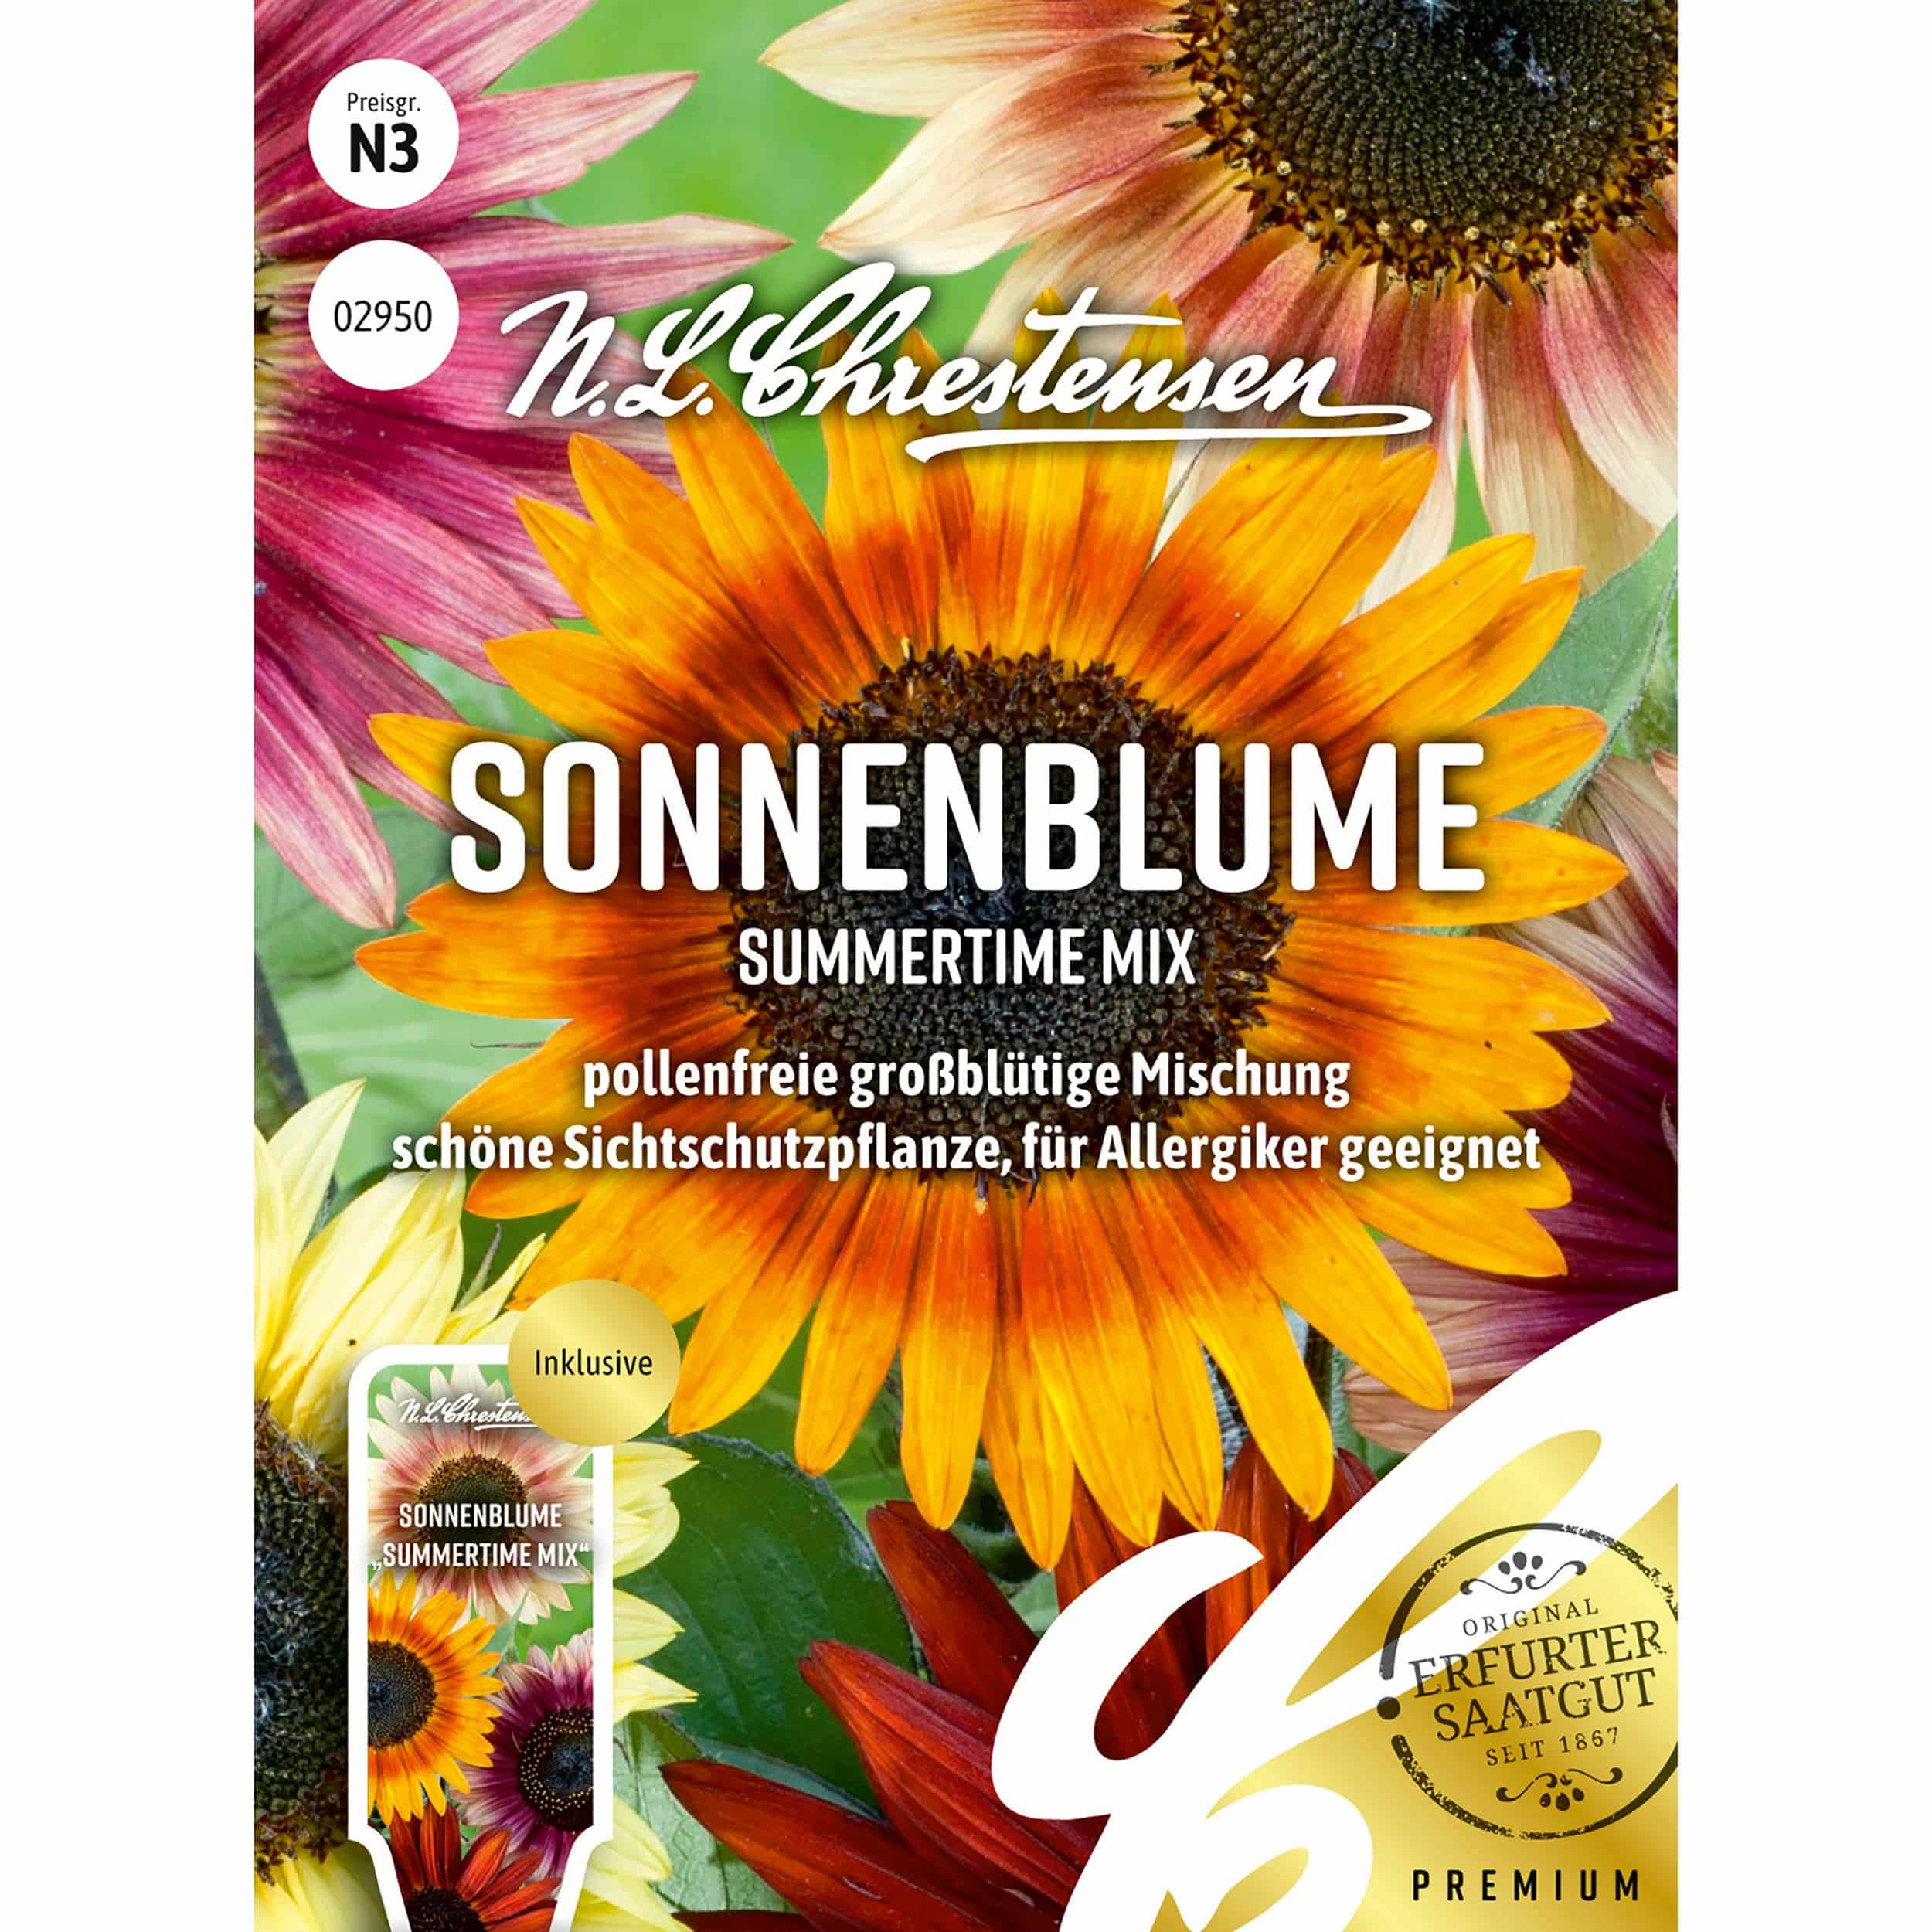 Sonnenblume Summertime Mix